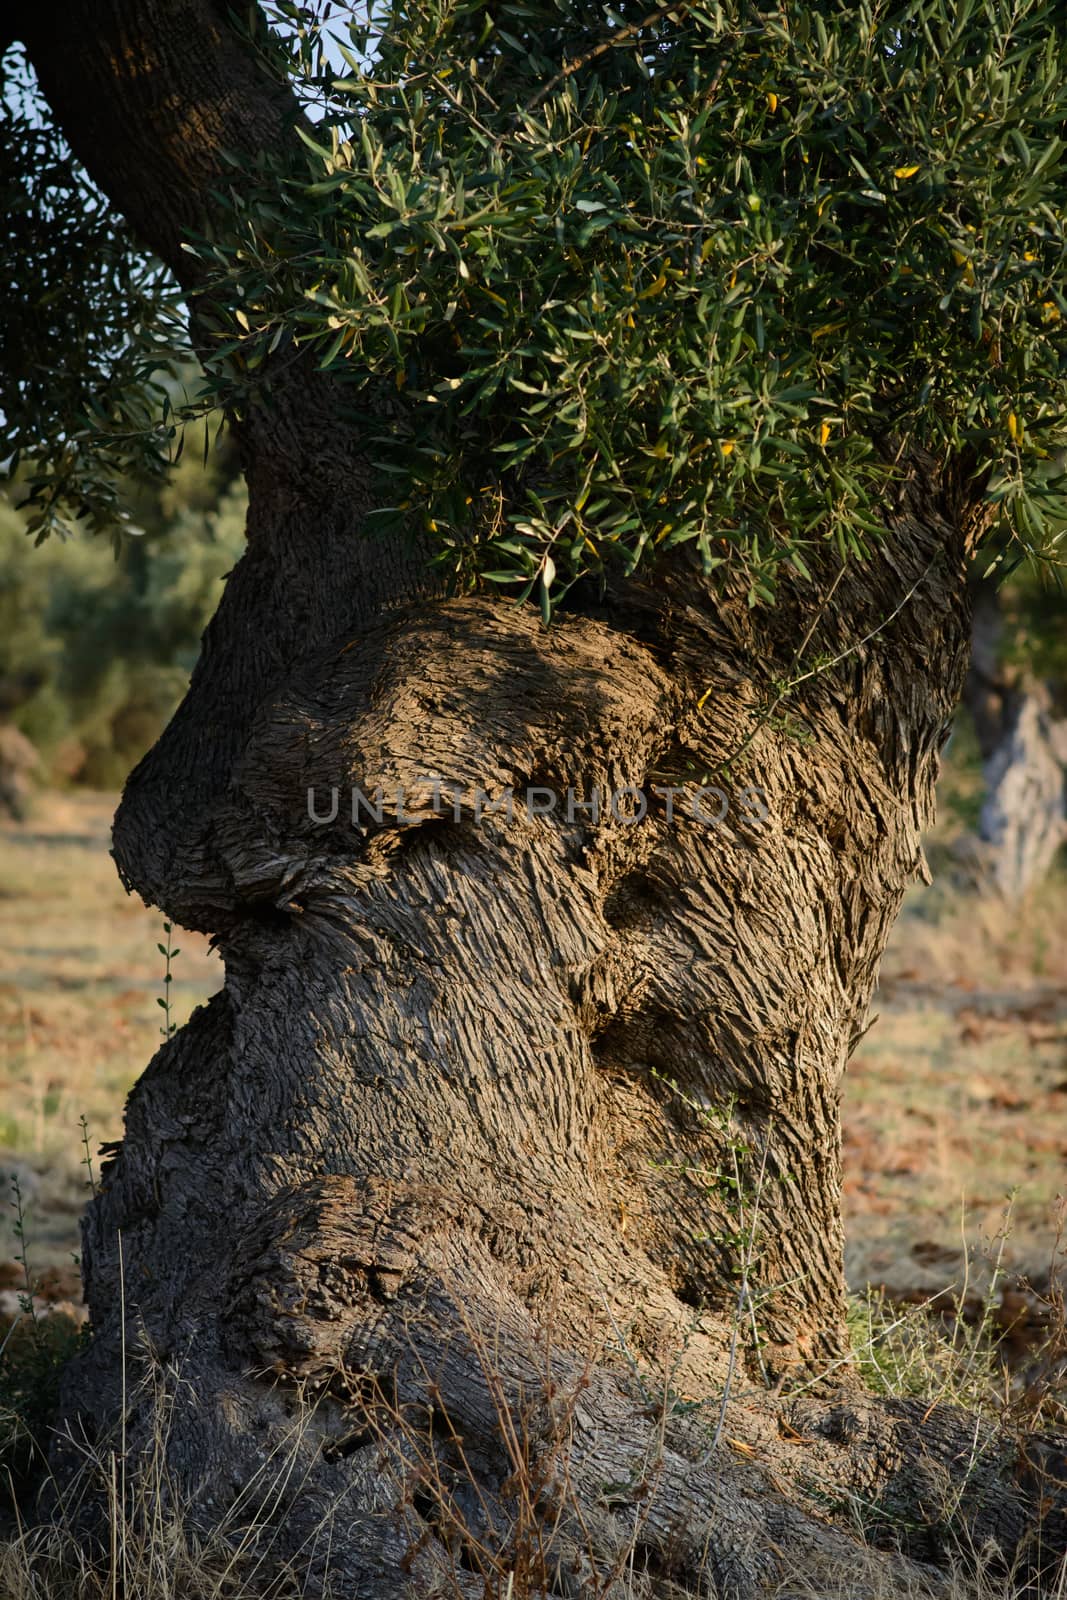 Olive trunk by cedicocinovo